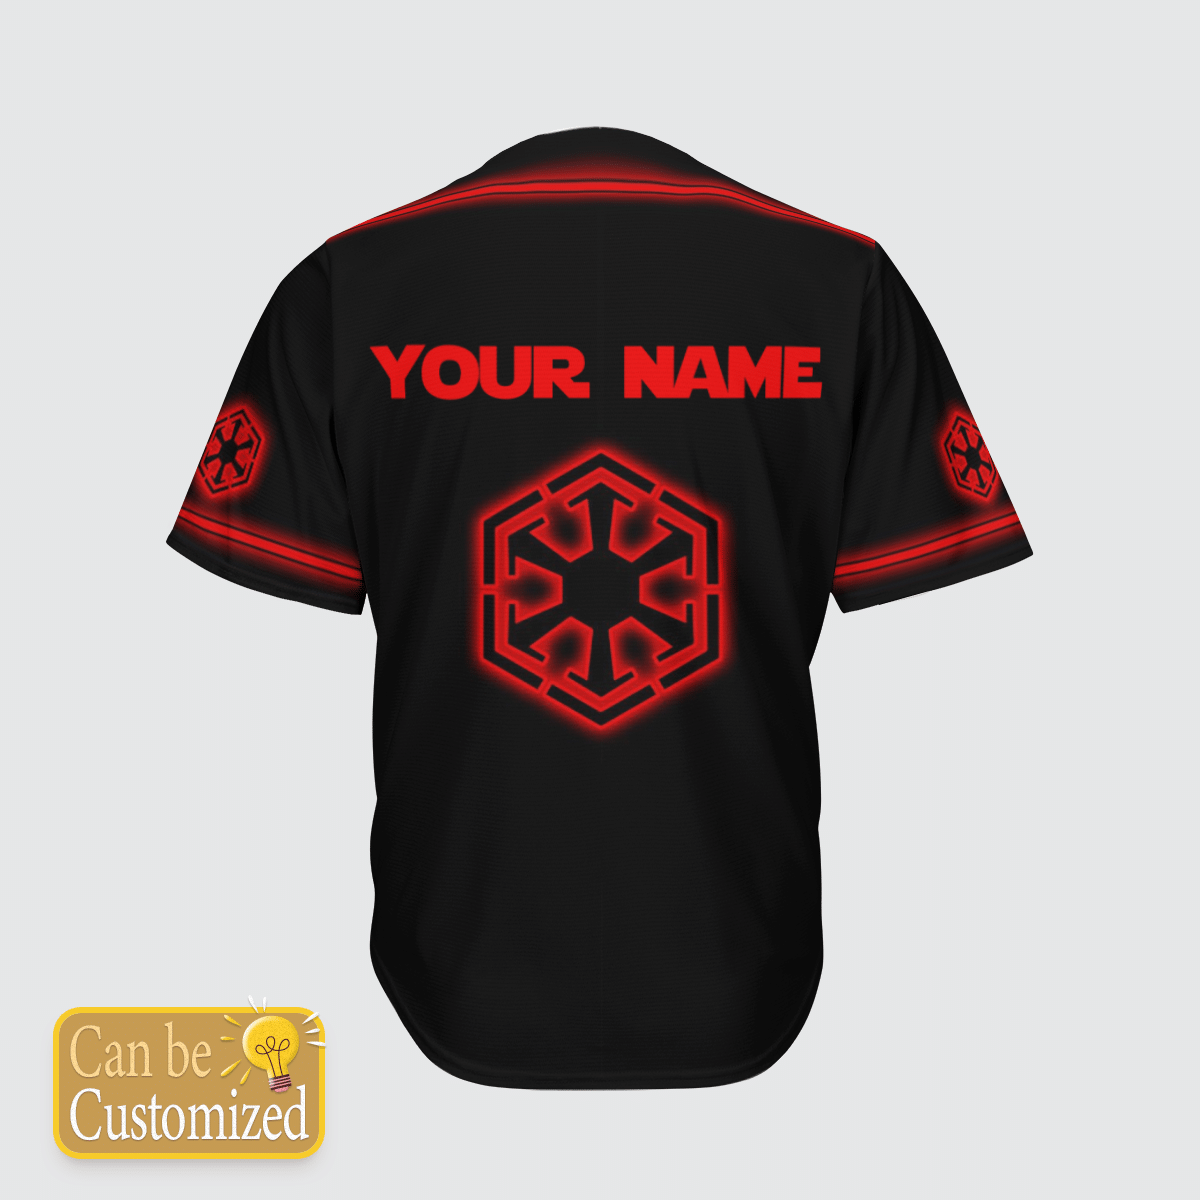 Sith Empire custom name baseball shirt 1